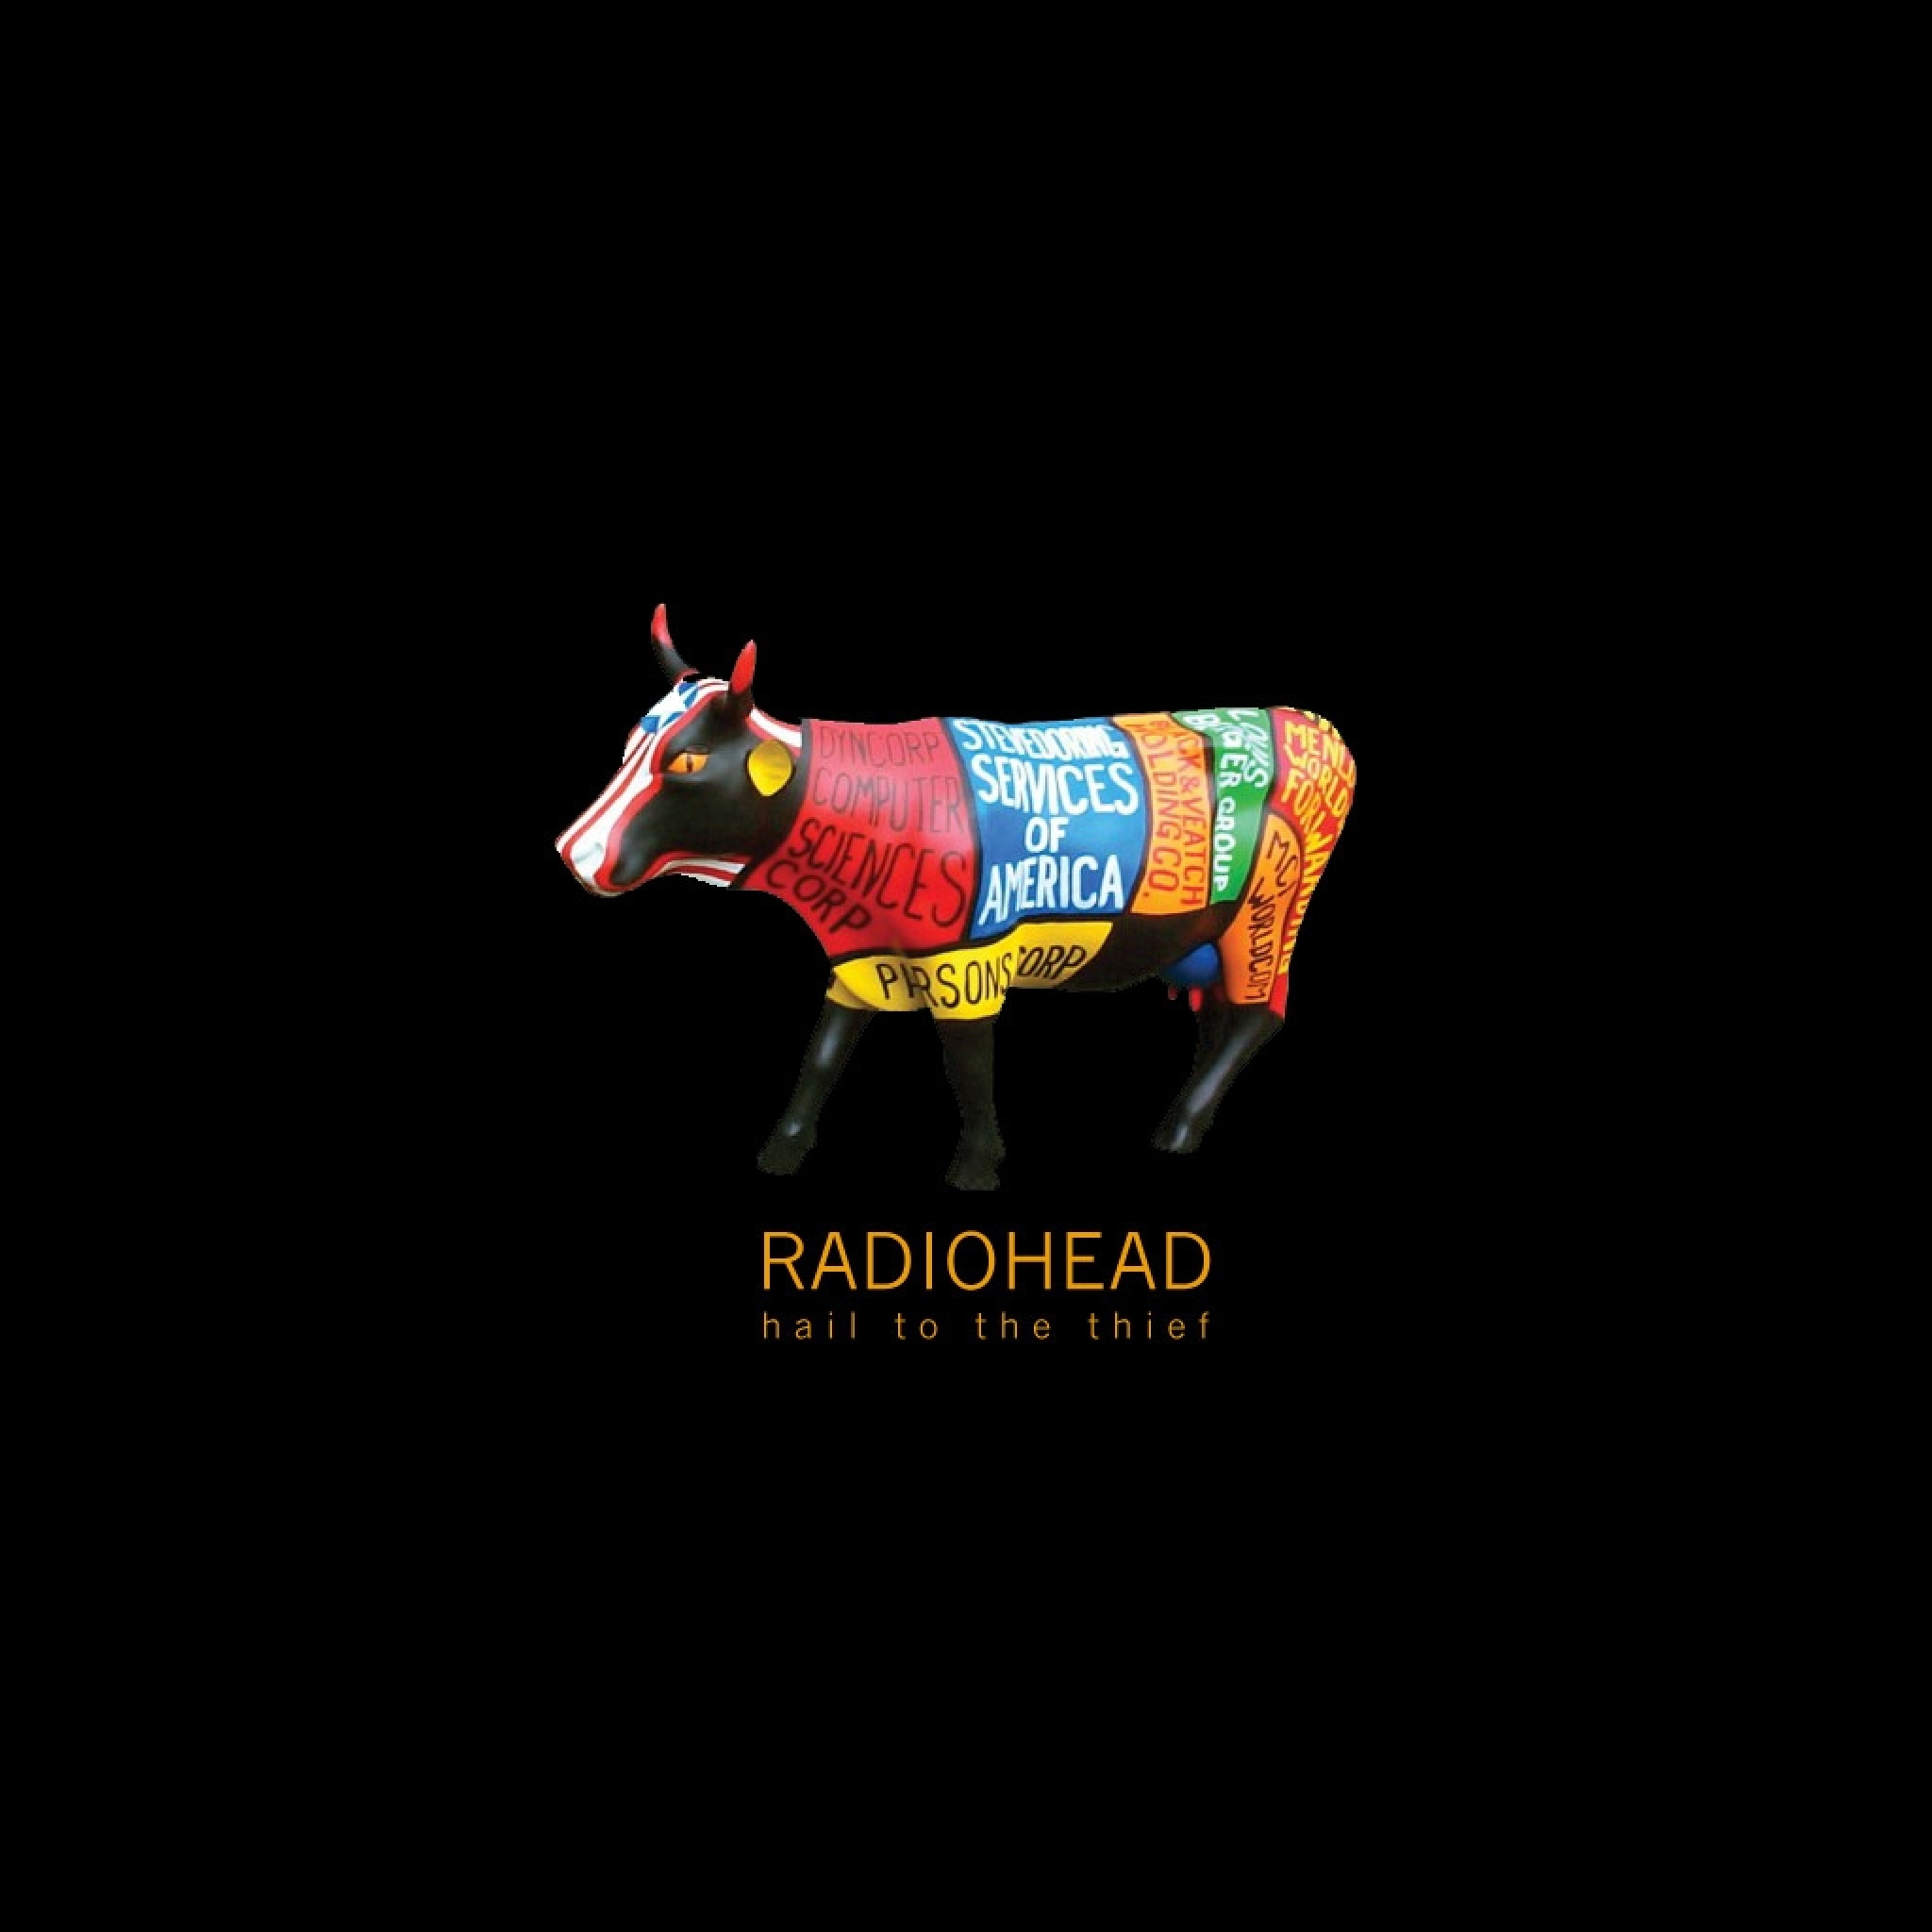 Radiohead Ipad タブレット壁紙ギャラリー